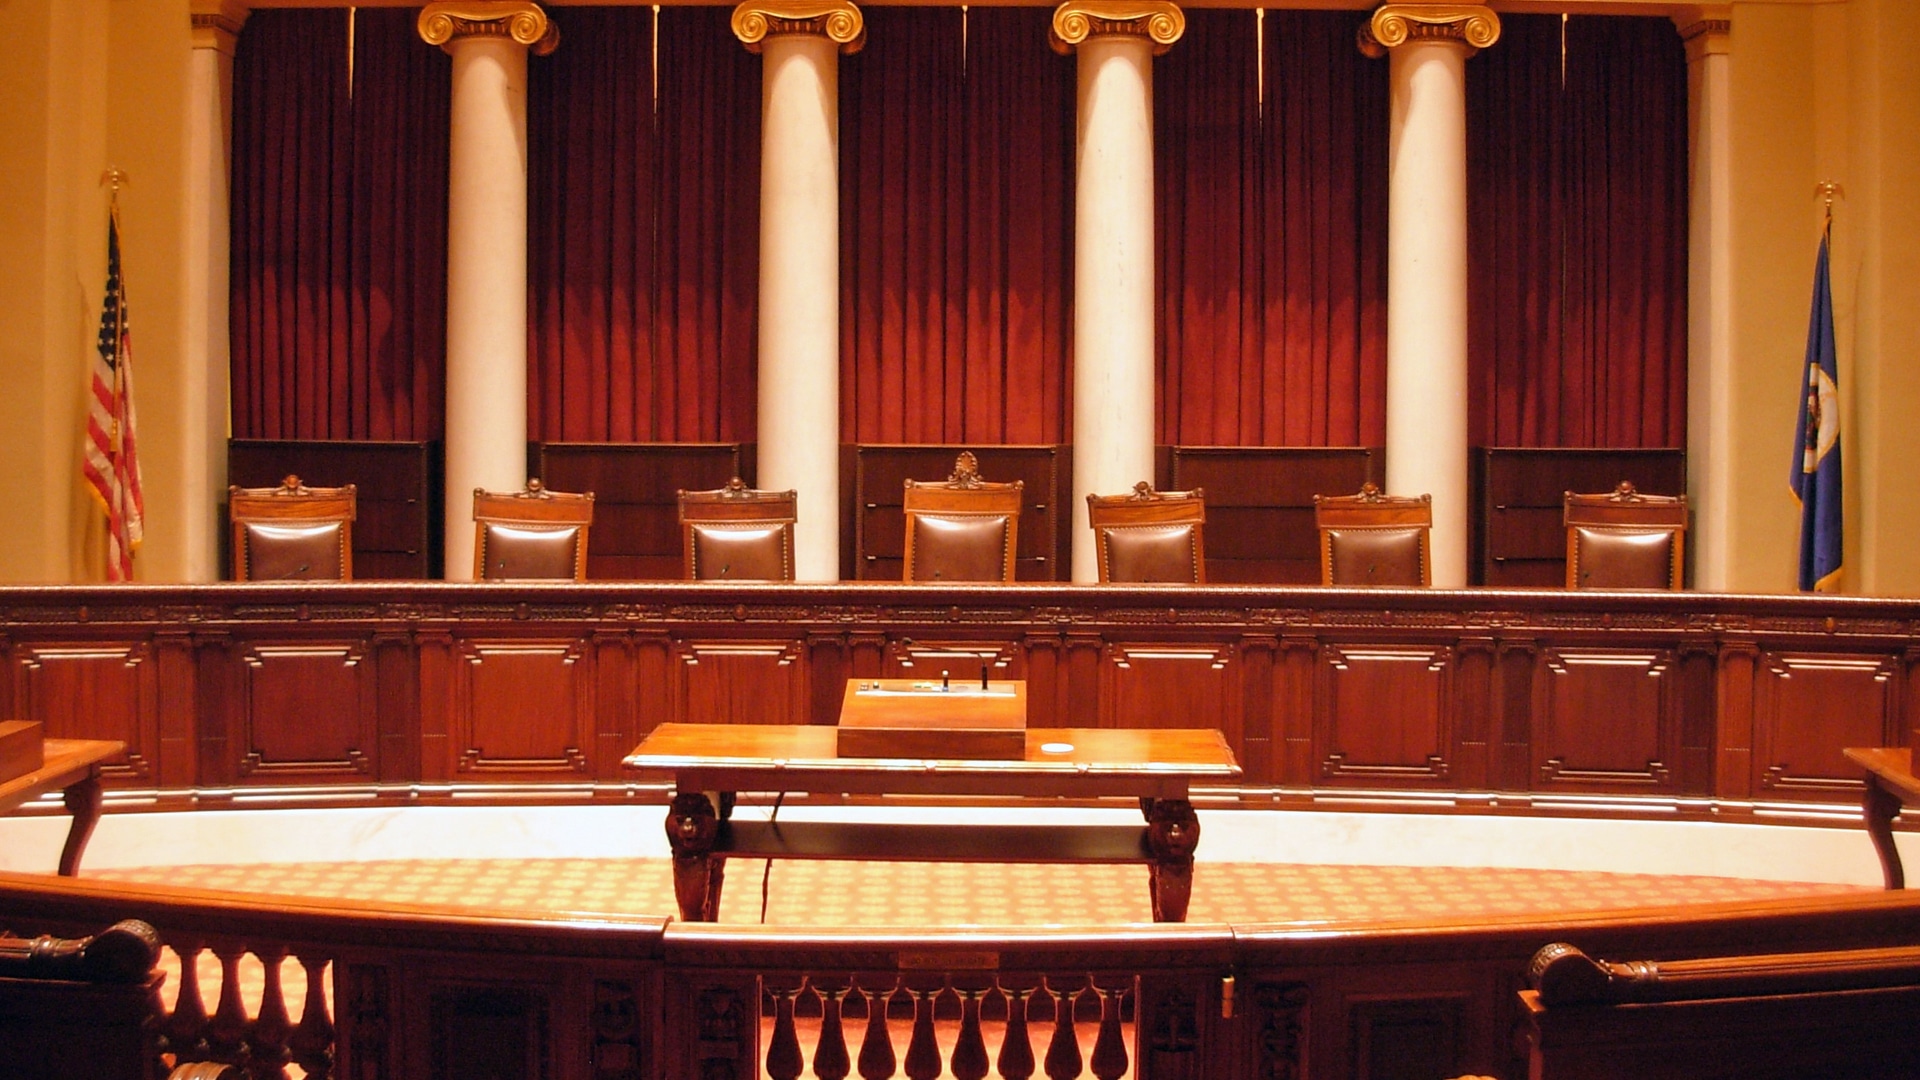 Blick in einen historischen Gerichtssaal in den Vereinigten Staaten